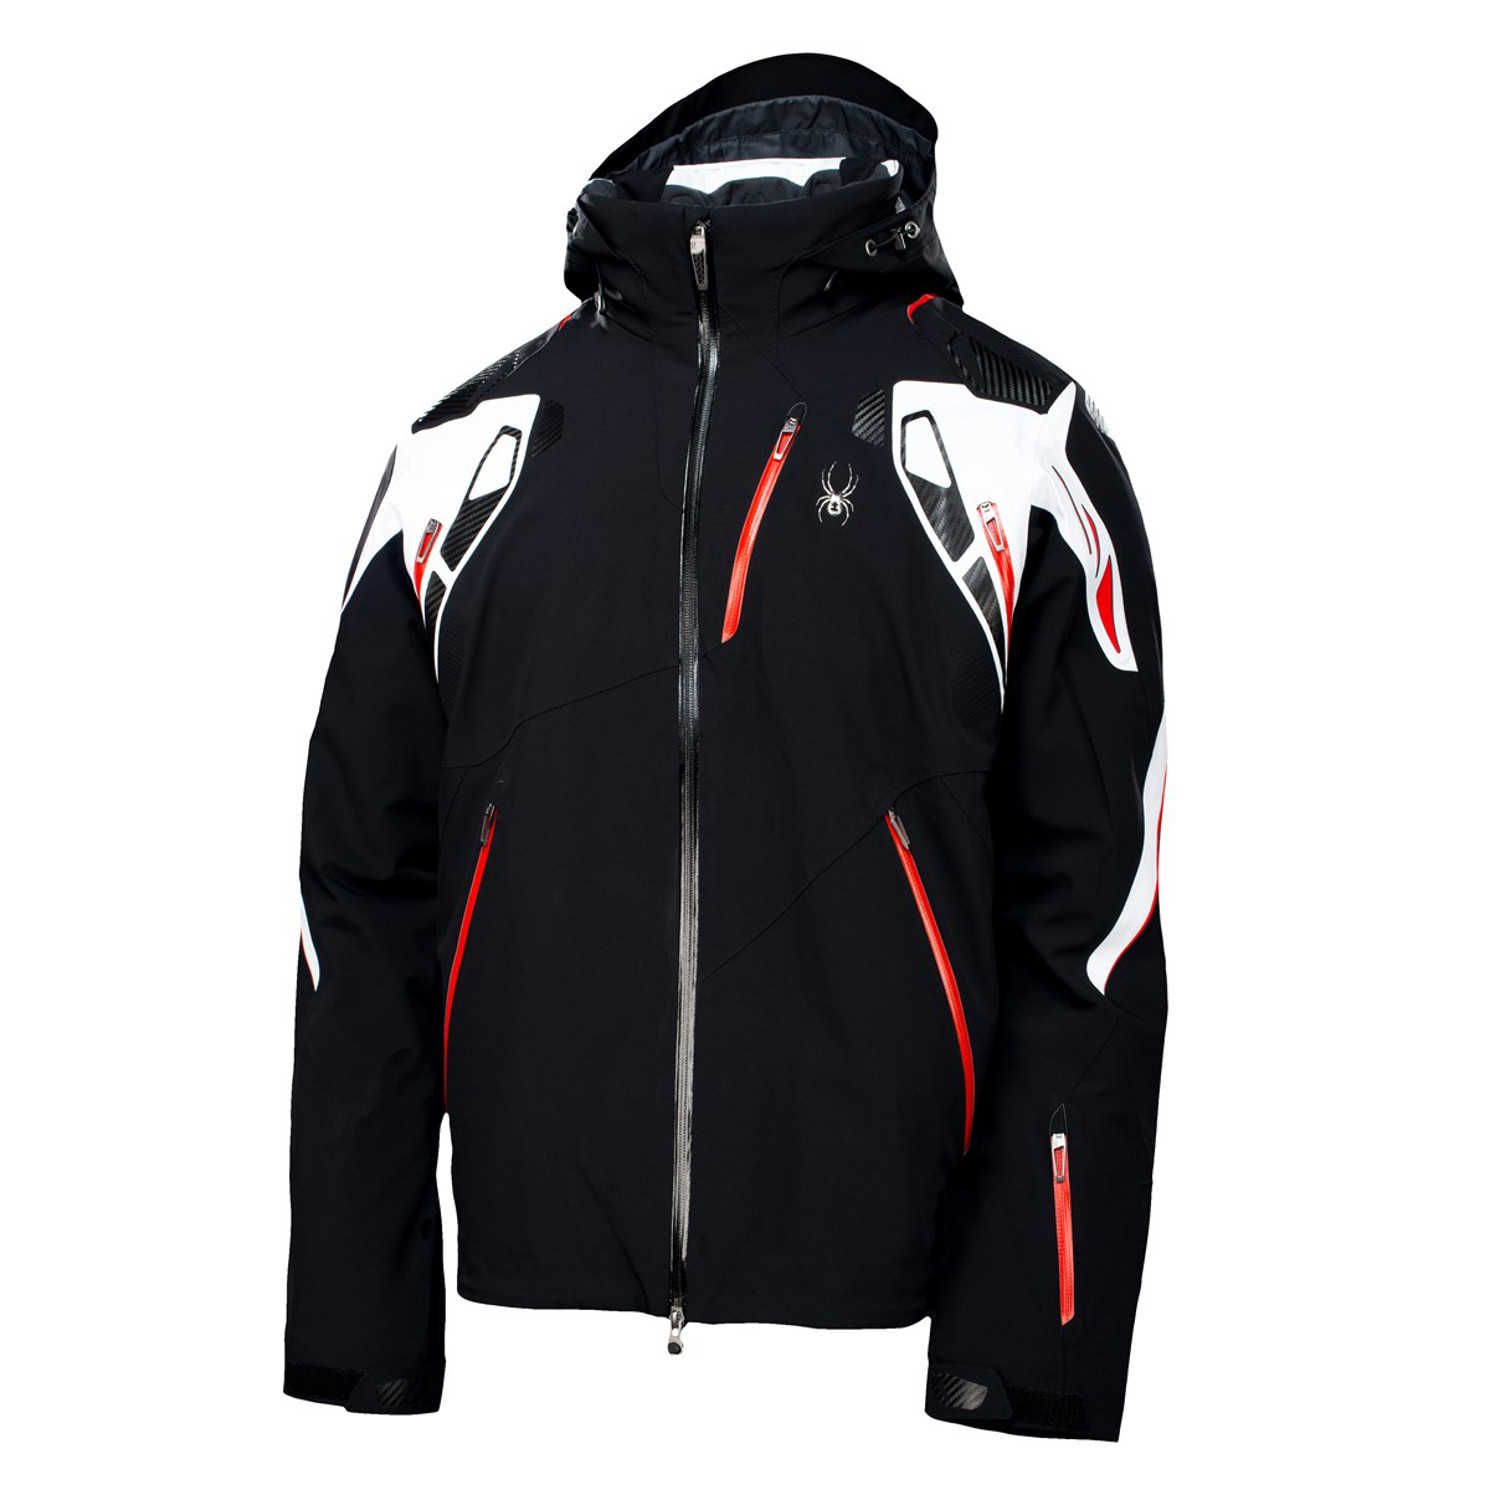 Veste de ski Pinnacle Spyder - Noir blanc rouge